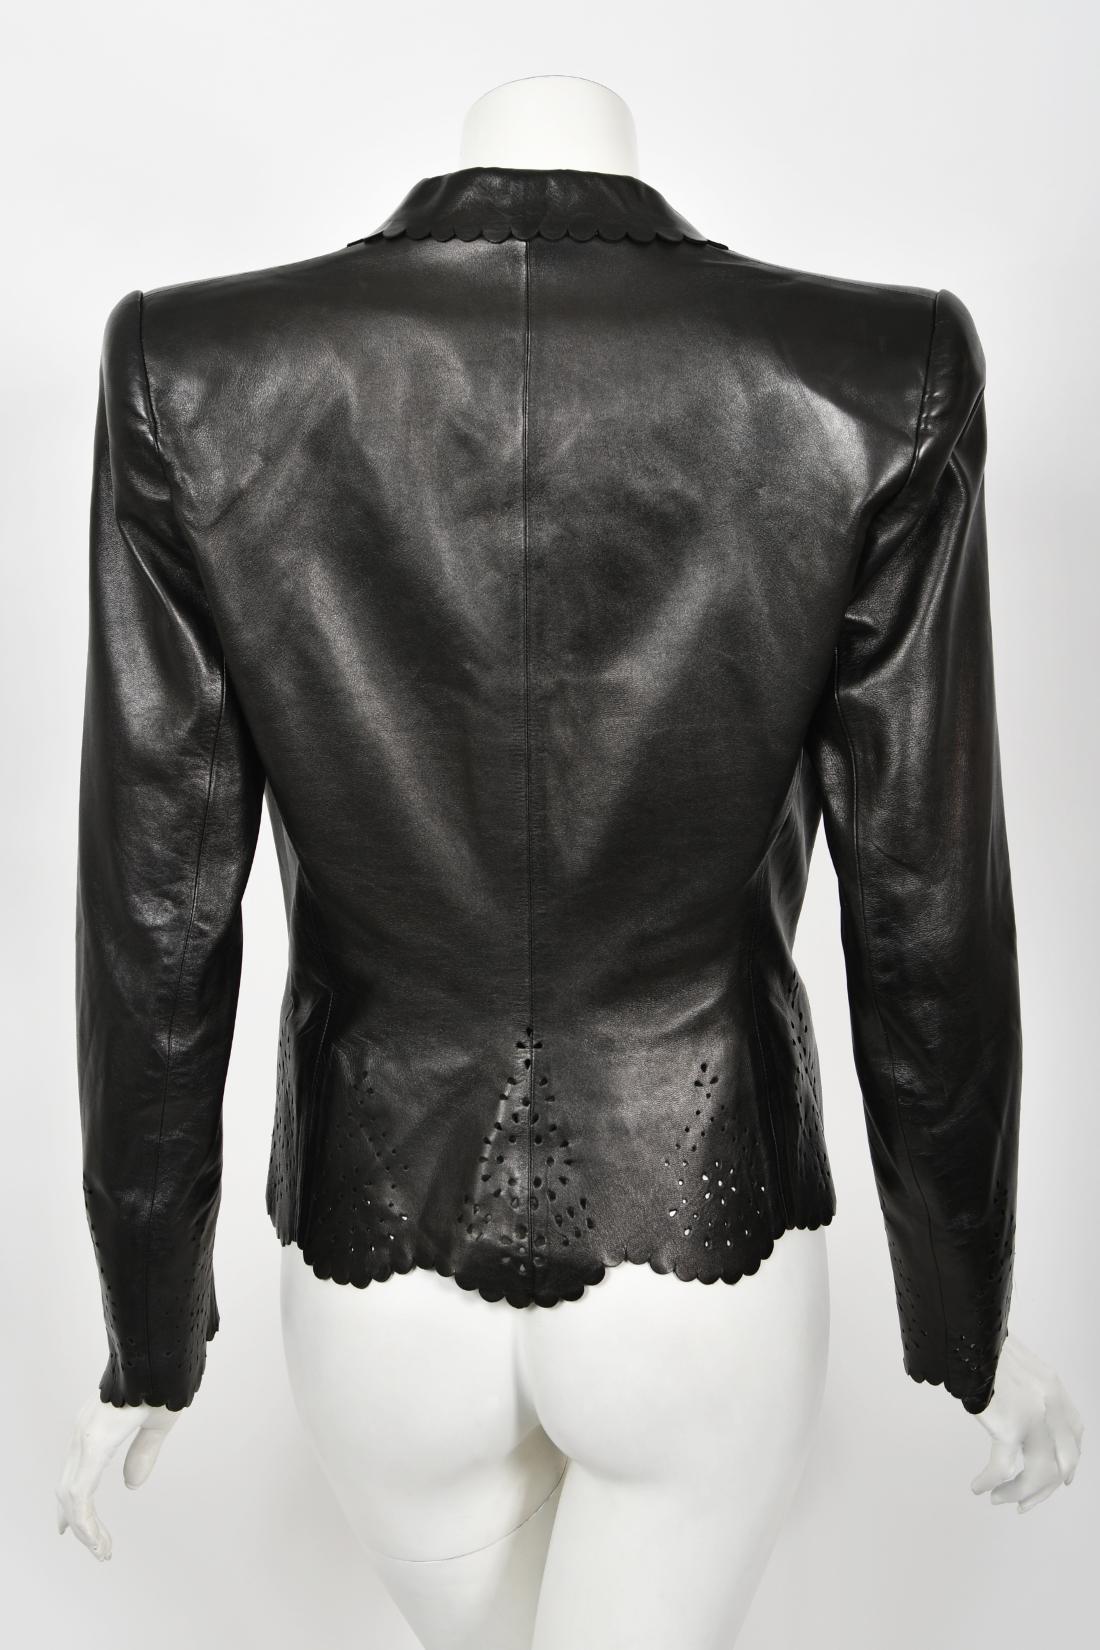 1997 Alexander Mcqueen for Givenchy Runway Black Leather Cutwork Blazer Jacket 10